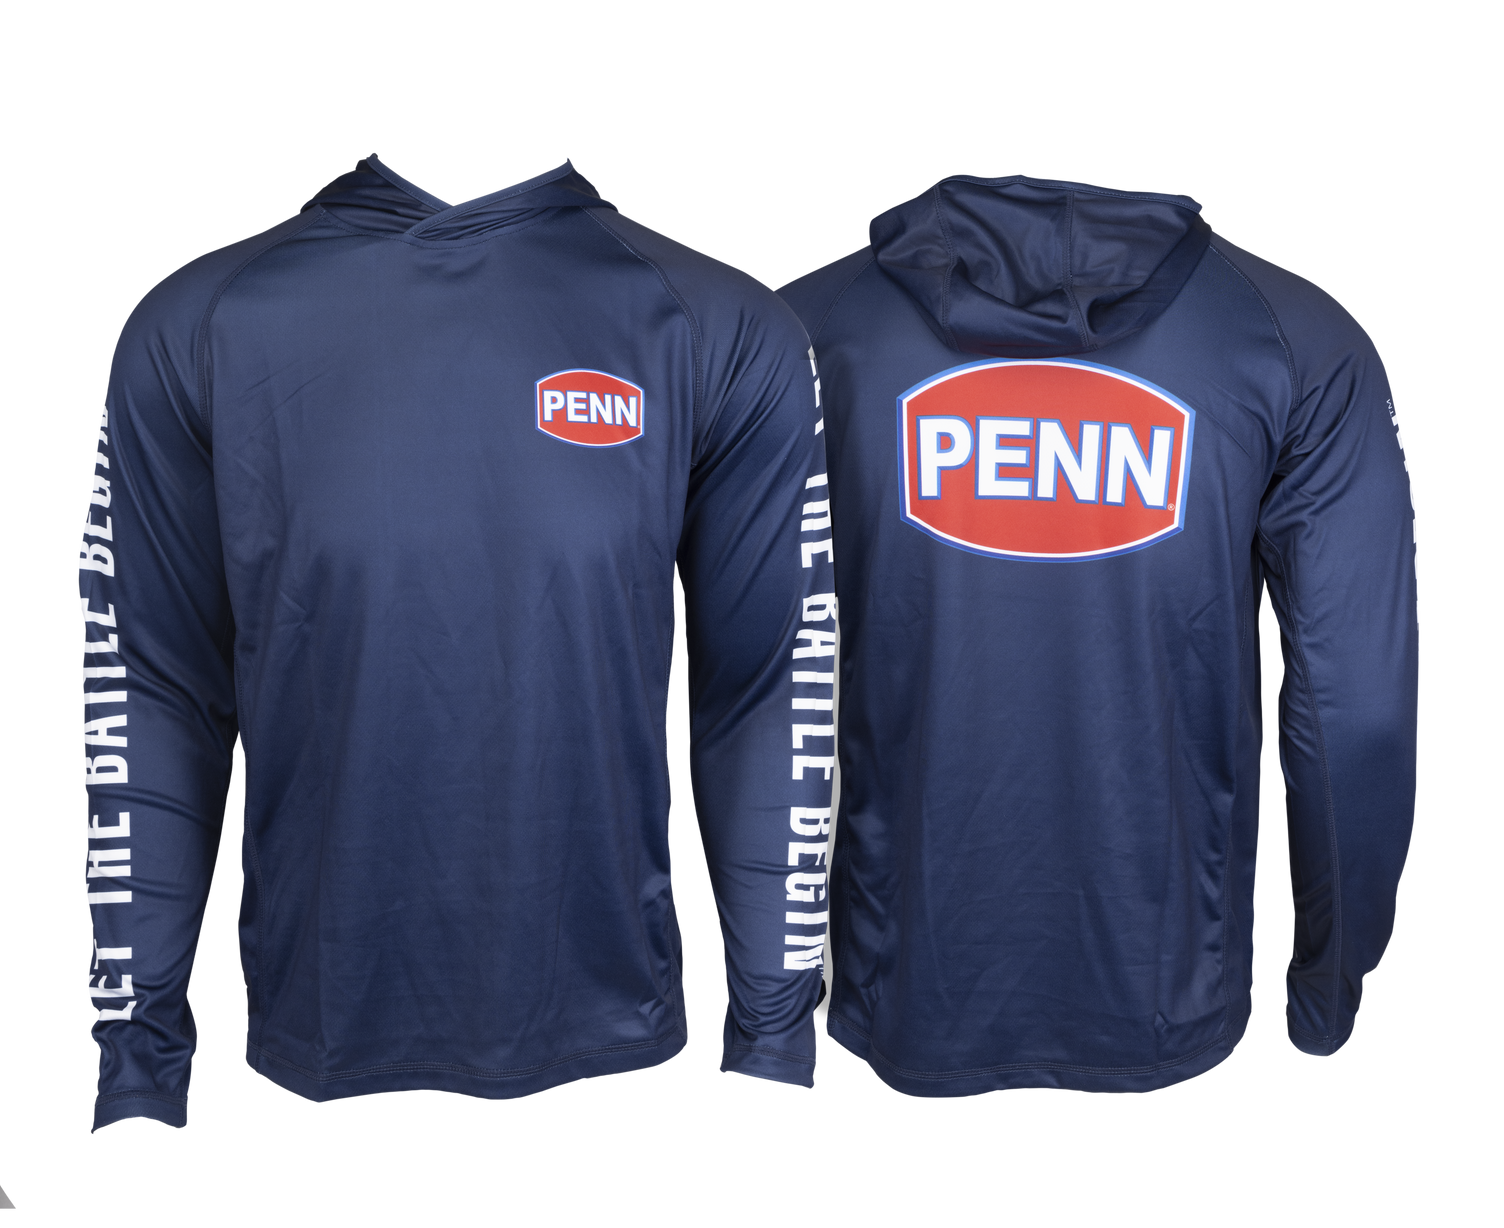 Penn Vented Performance Shirts - Tan, M